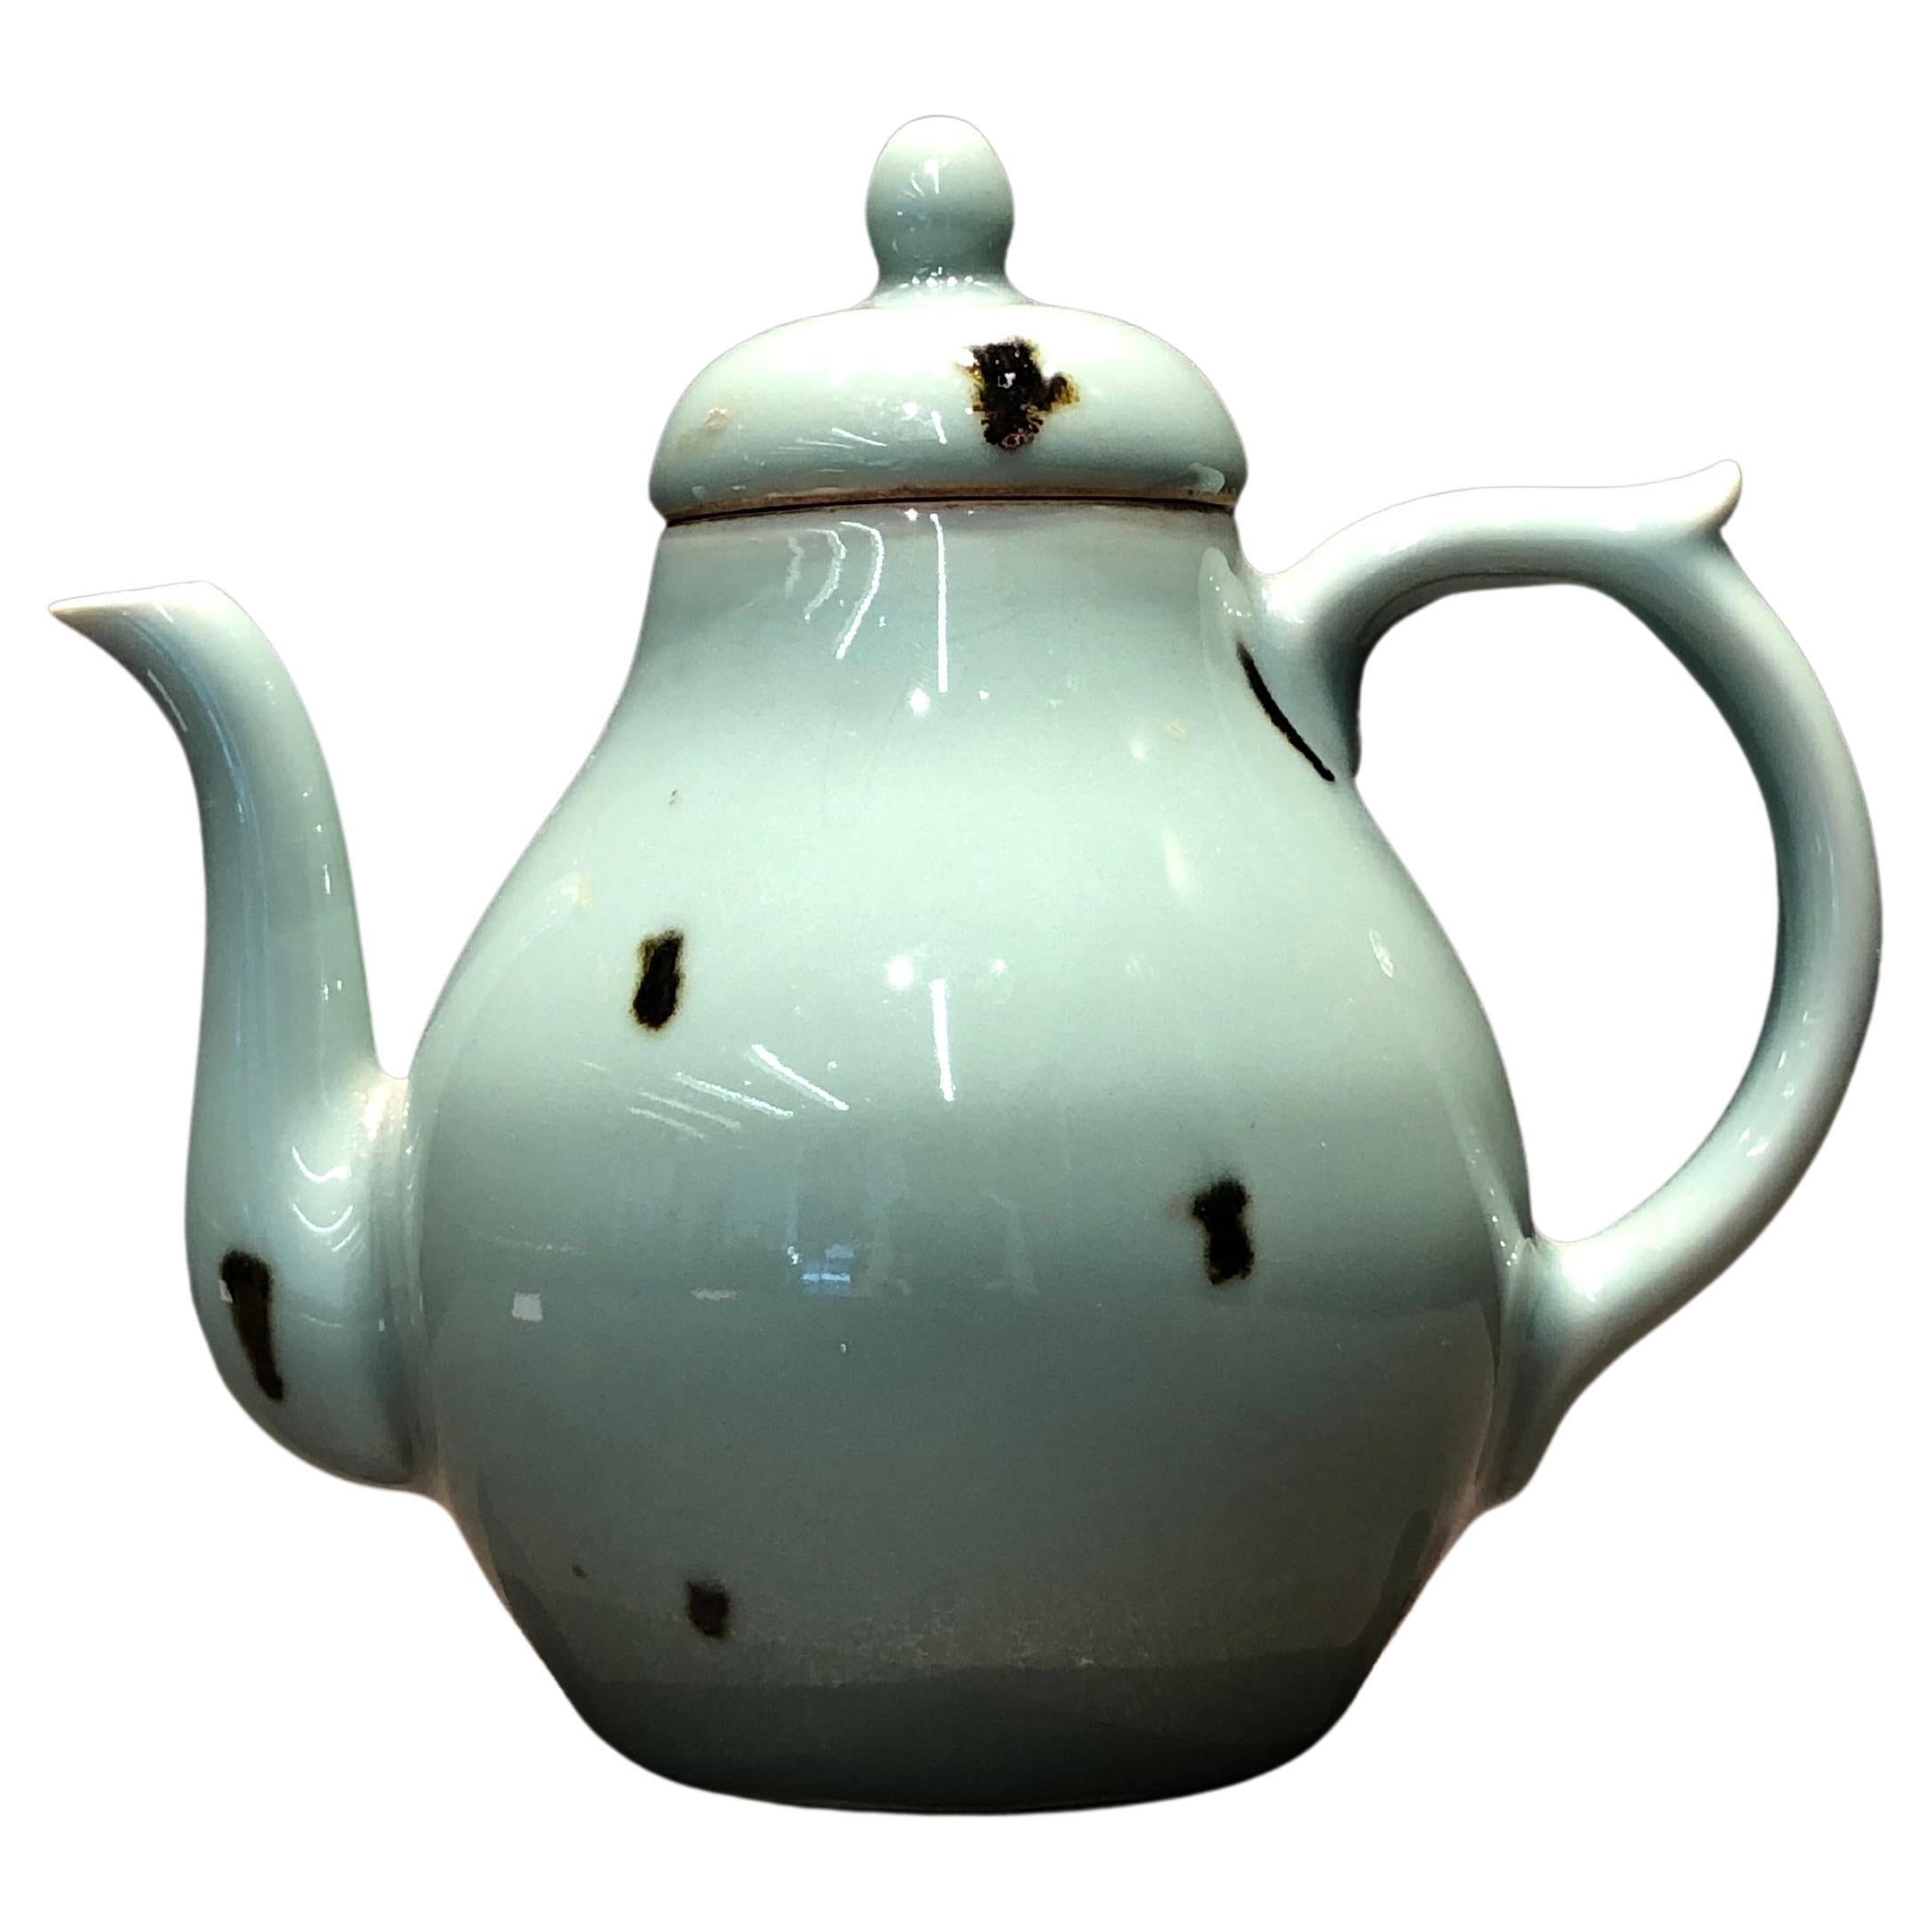 Japanese Dot Designed China Teapot, Taisho Period